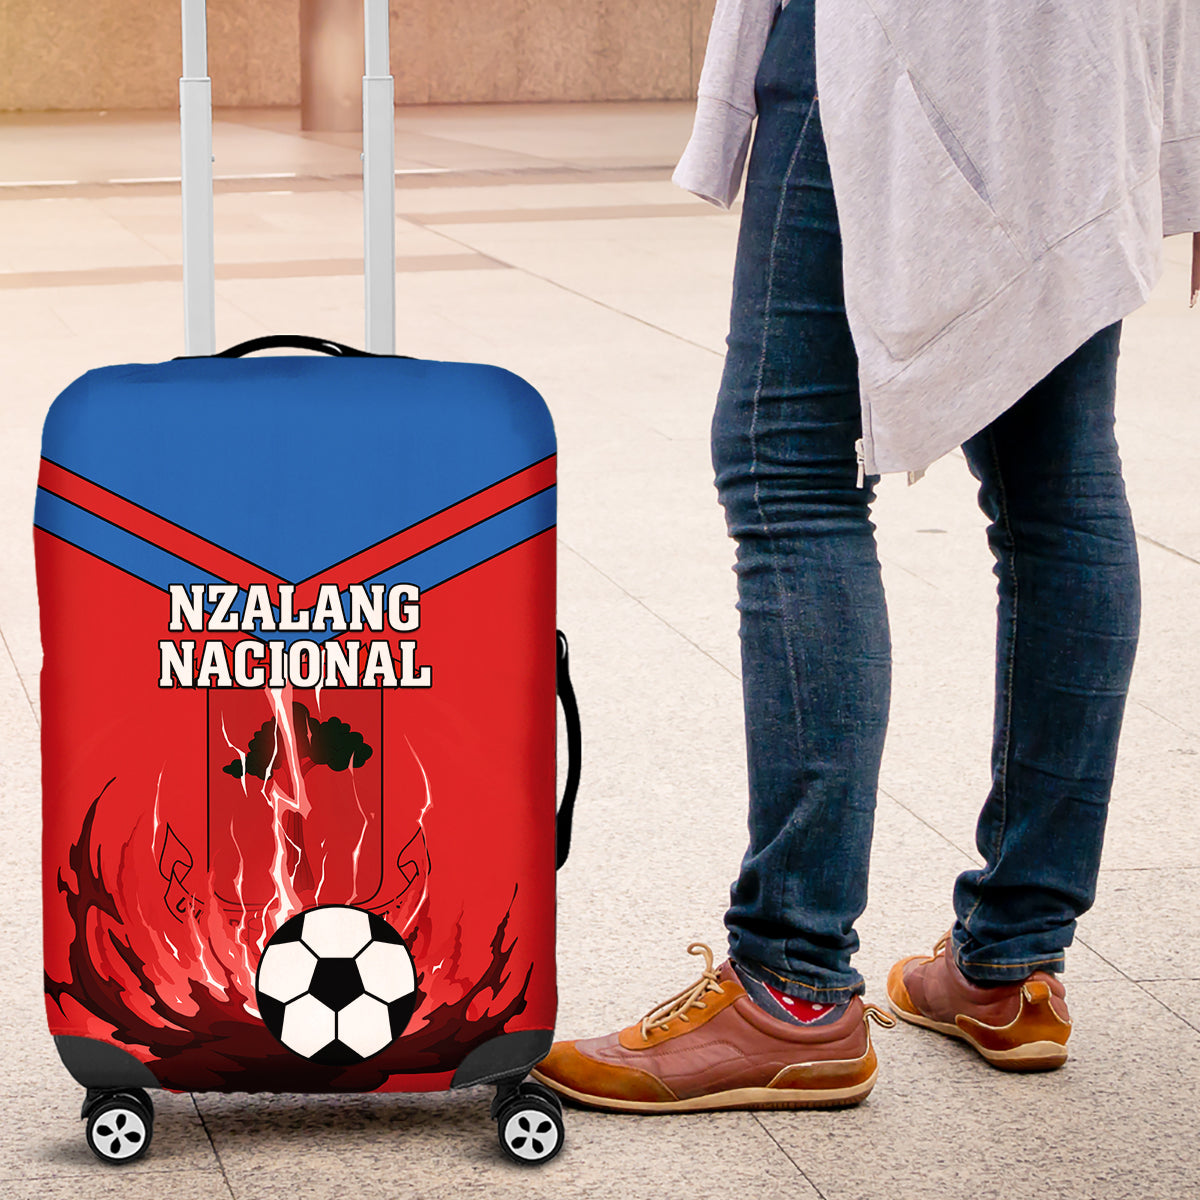 Equatorial Guinea Football Luggage Cover Come On Nzalang Nacional